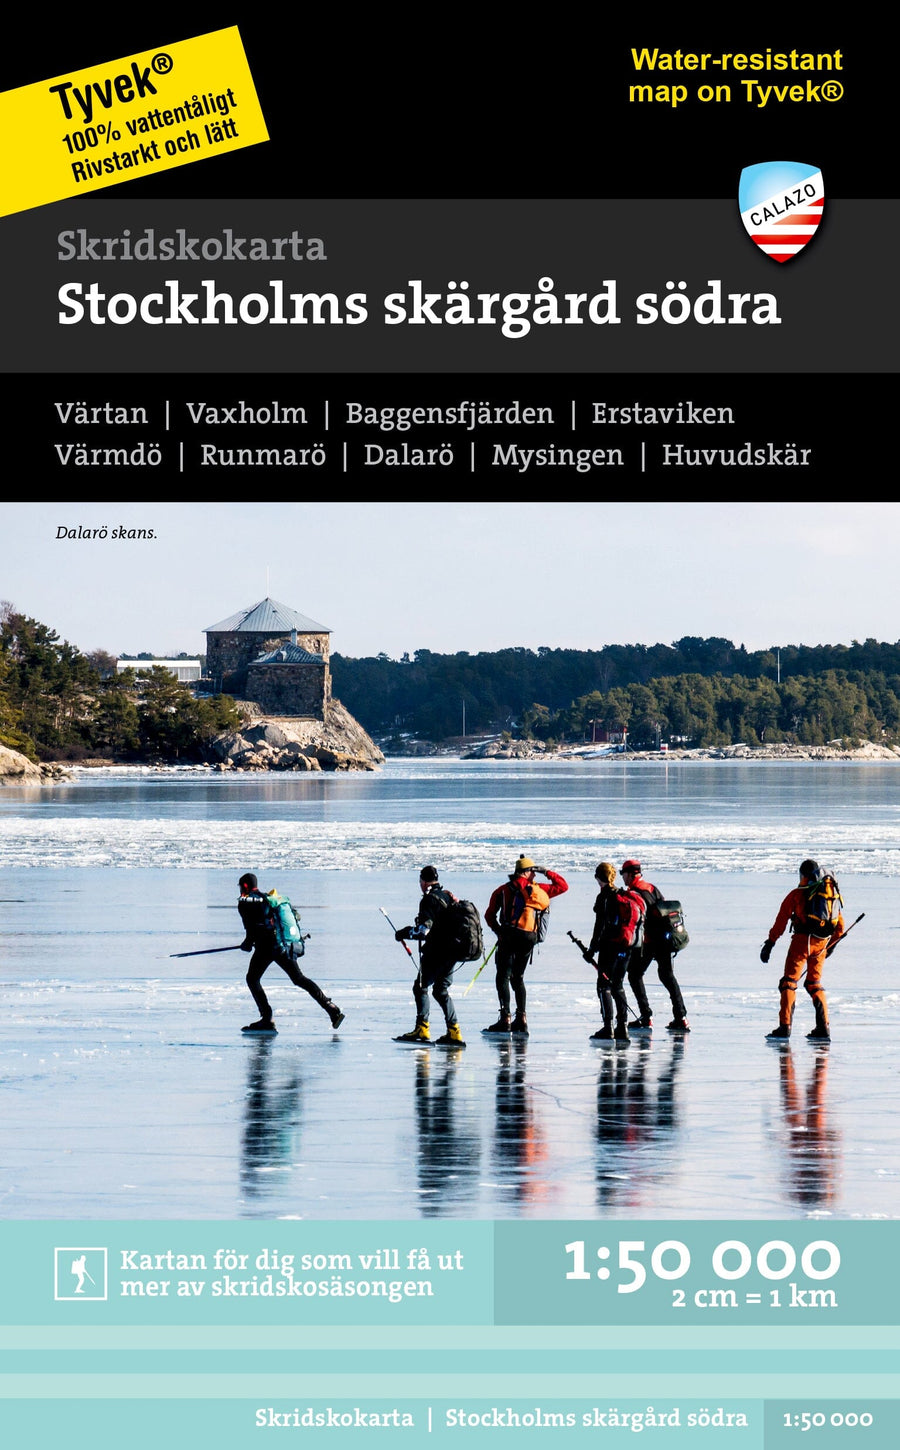 Carte de patinage - Stockholms skärgård - södra (Suède) | Calazo carte pliée Calazo 